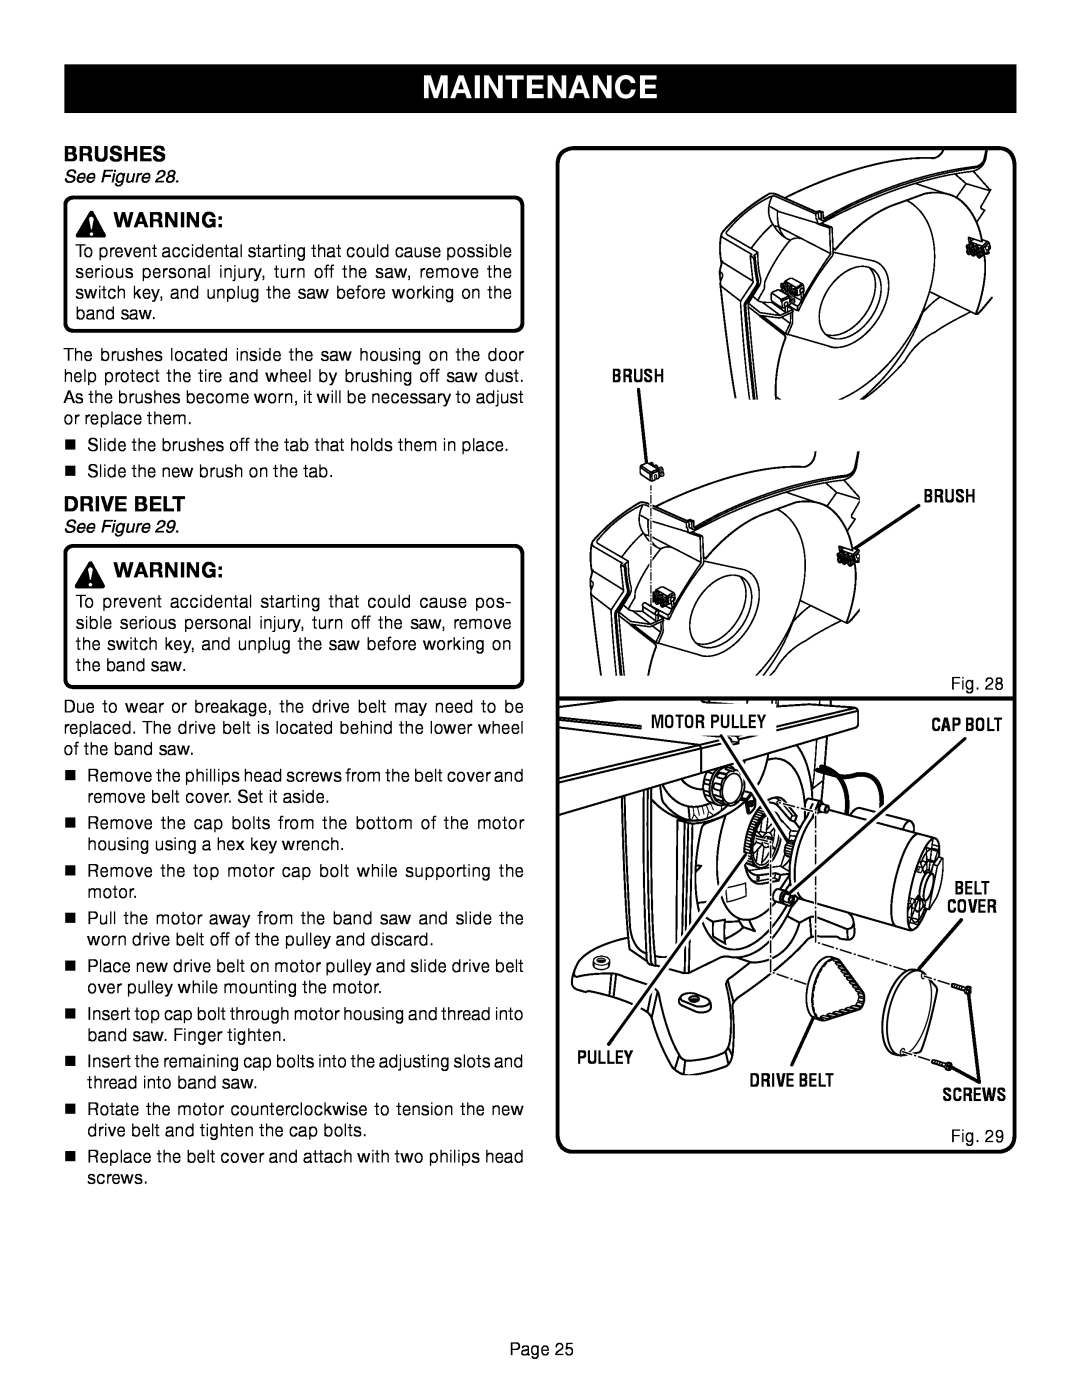 Ryobi BS1001SV manual Maintenance, See Figure, Brush Brush, Motor Pulley, Pulley Drive Belt, Belt Cover Screws 